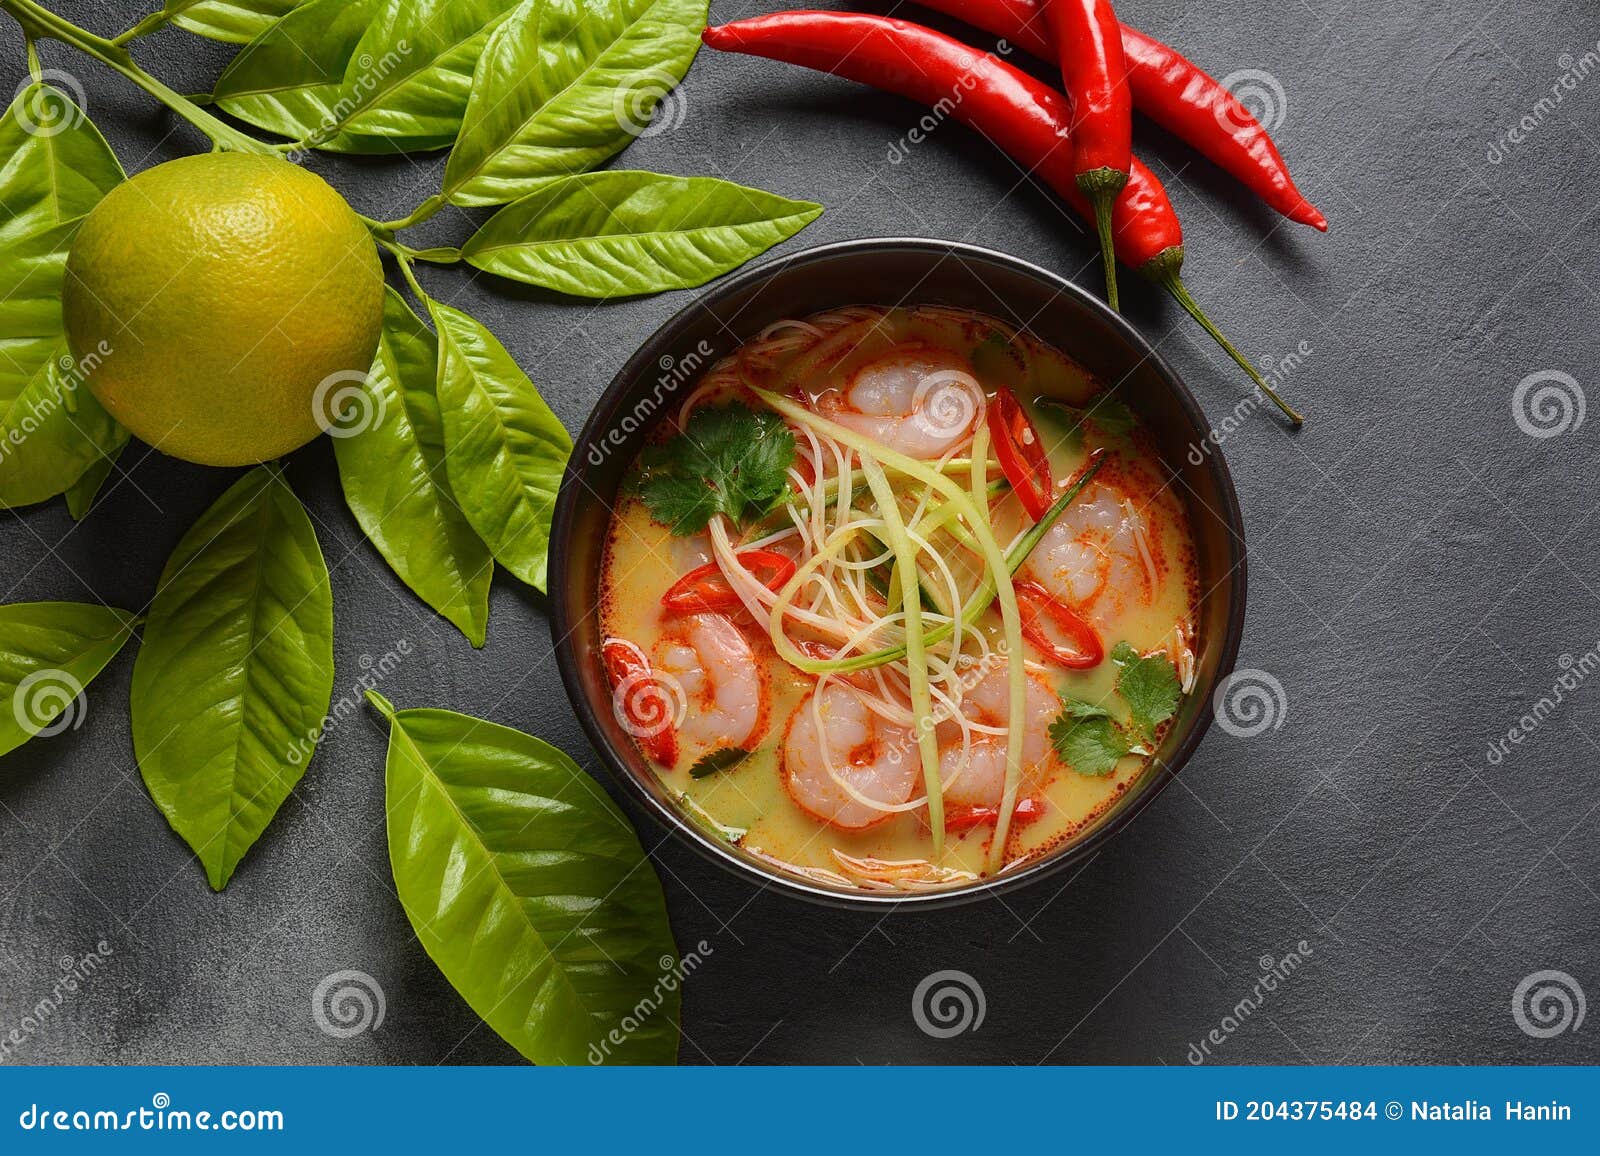 Laksa Soup â€“ a Malaysian Coconut Curry Soup with Shrimps Stock Photo ...